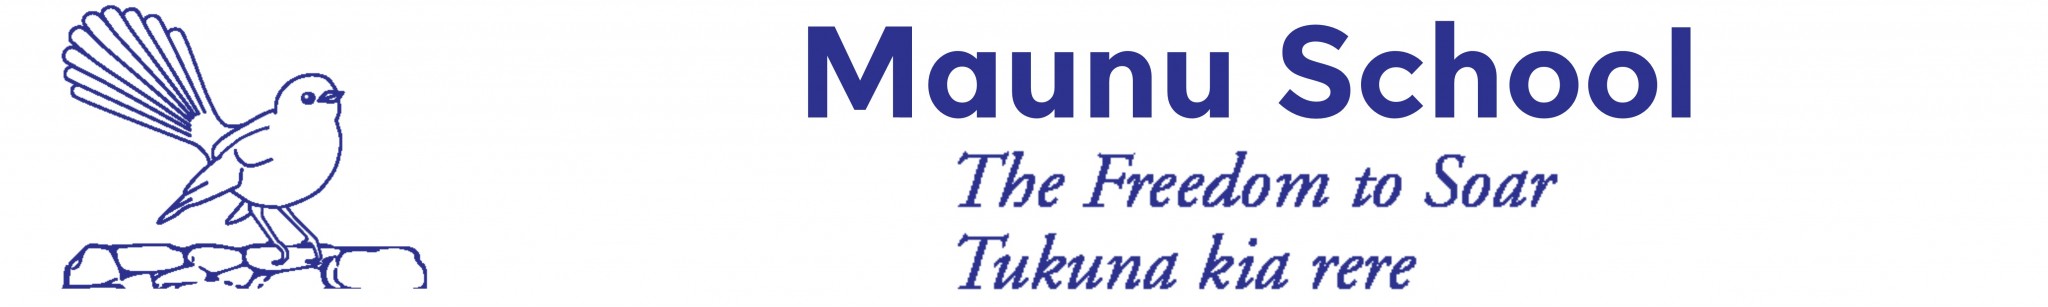 Maunu School